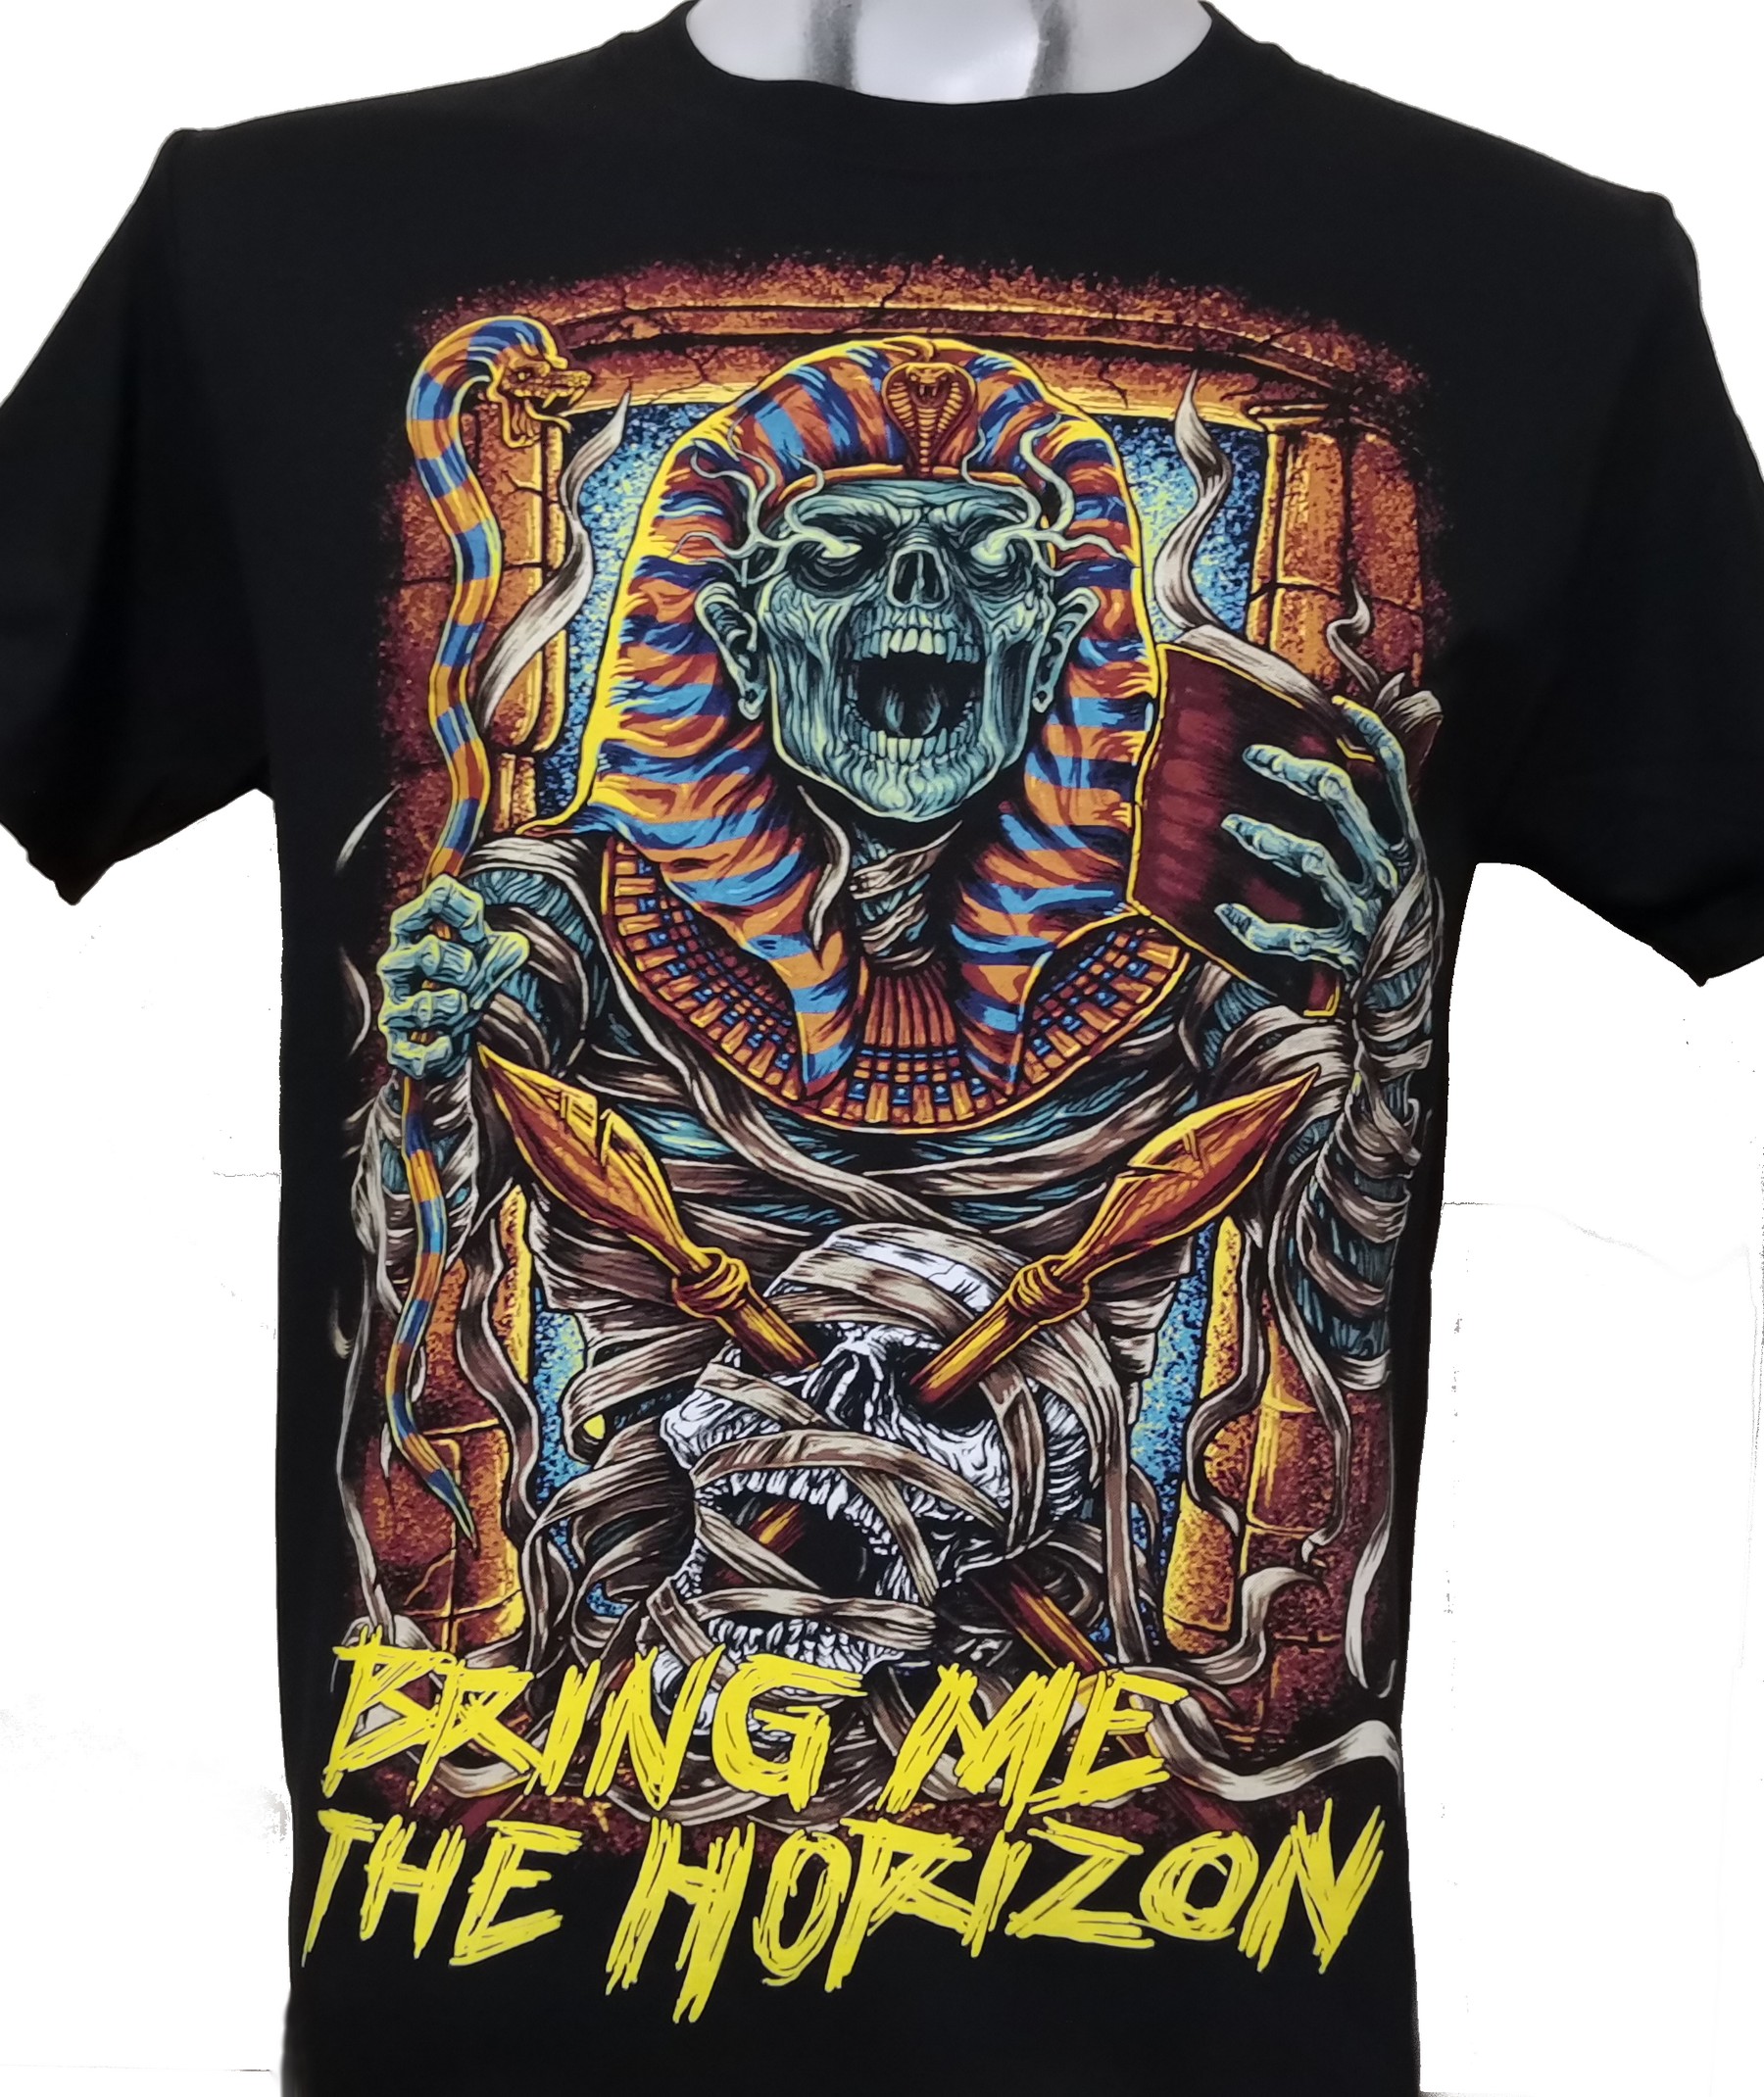 Jurassic Park Interpersoonlijk Omgeving Bring Me The Horizon t-shirt size M – RoxxBKK